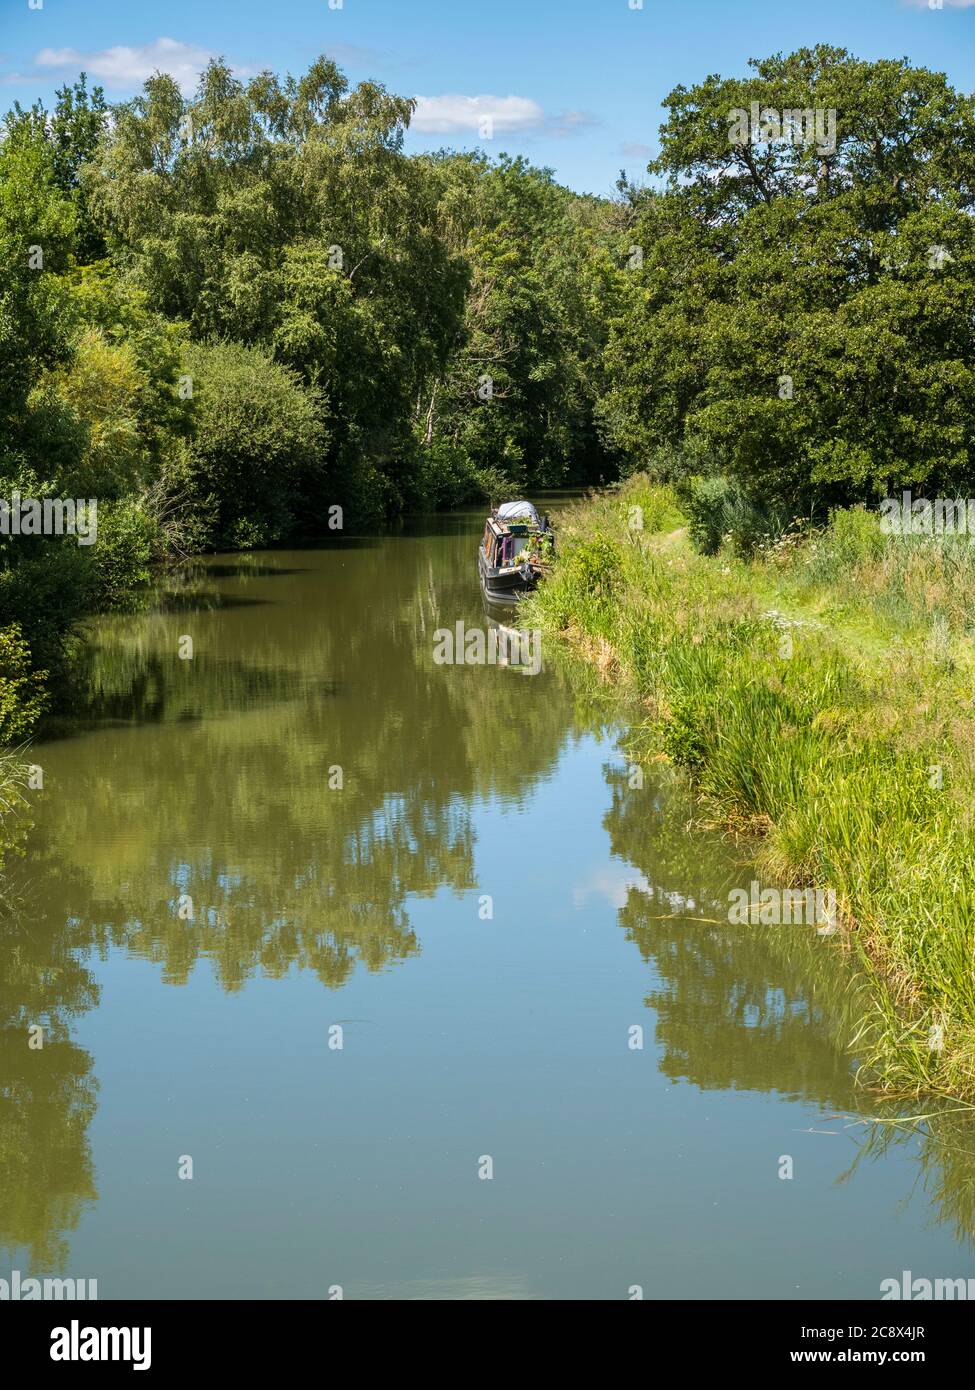 Idyllique Kennett et Avon Canal, nr Kintbury, Hungerford, Reading, Berkshire, Angleterre, Royaume-Uni, GB. Banque D'Images